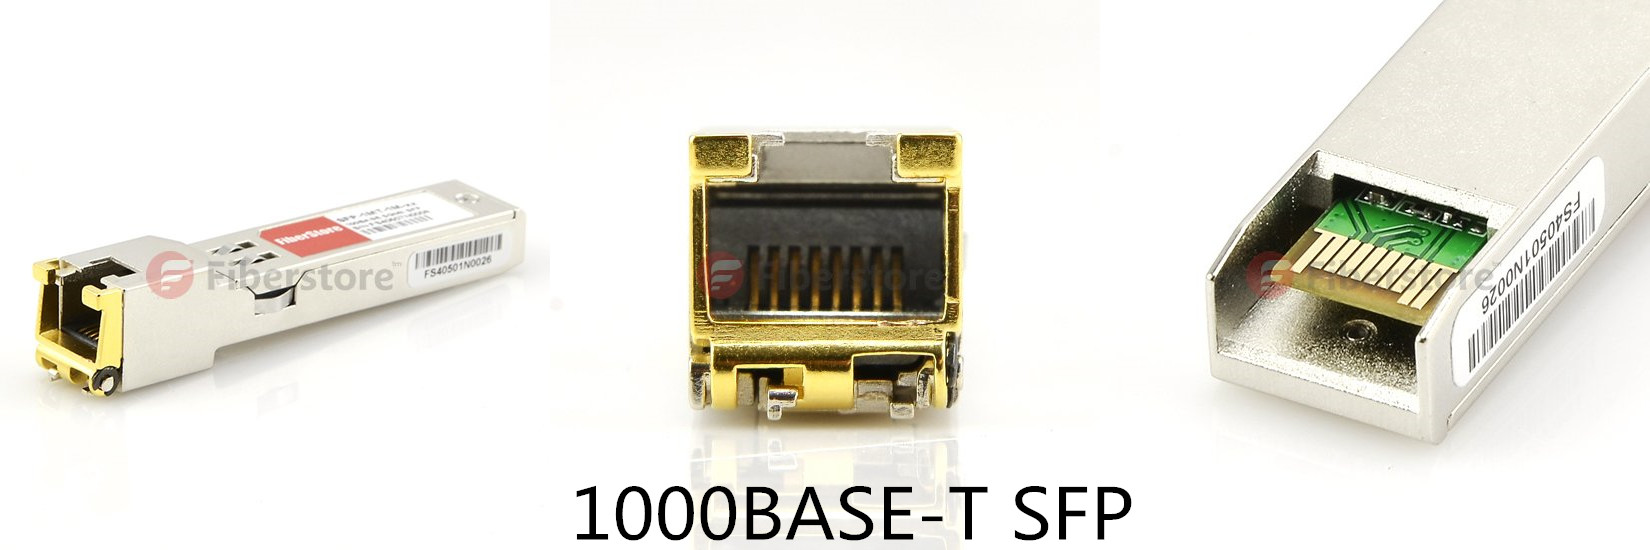 1000base T Sfp Archives Fiber Optical Networking